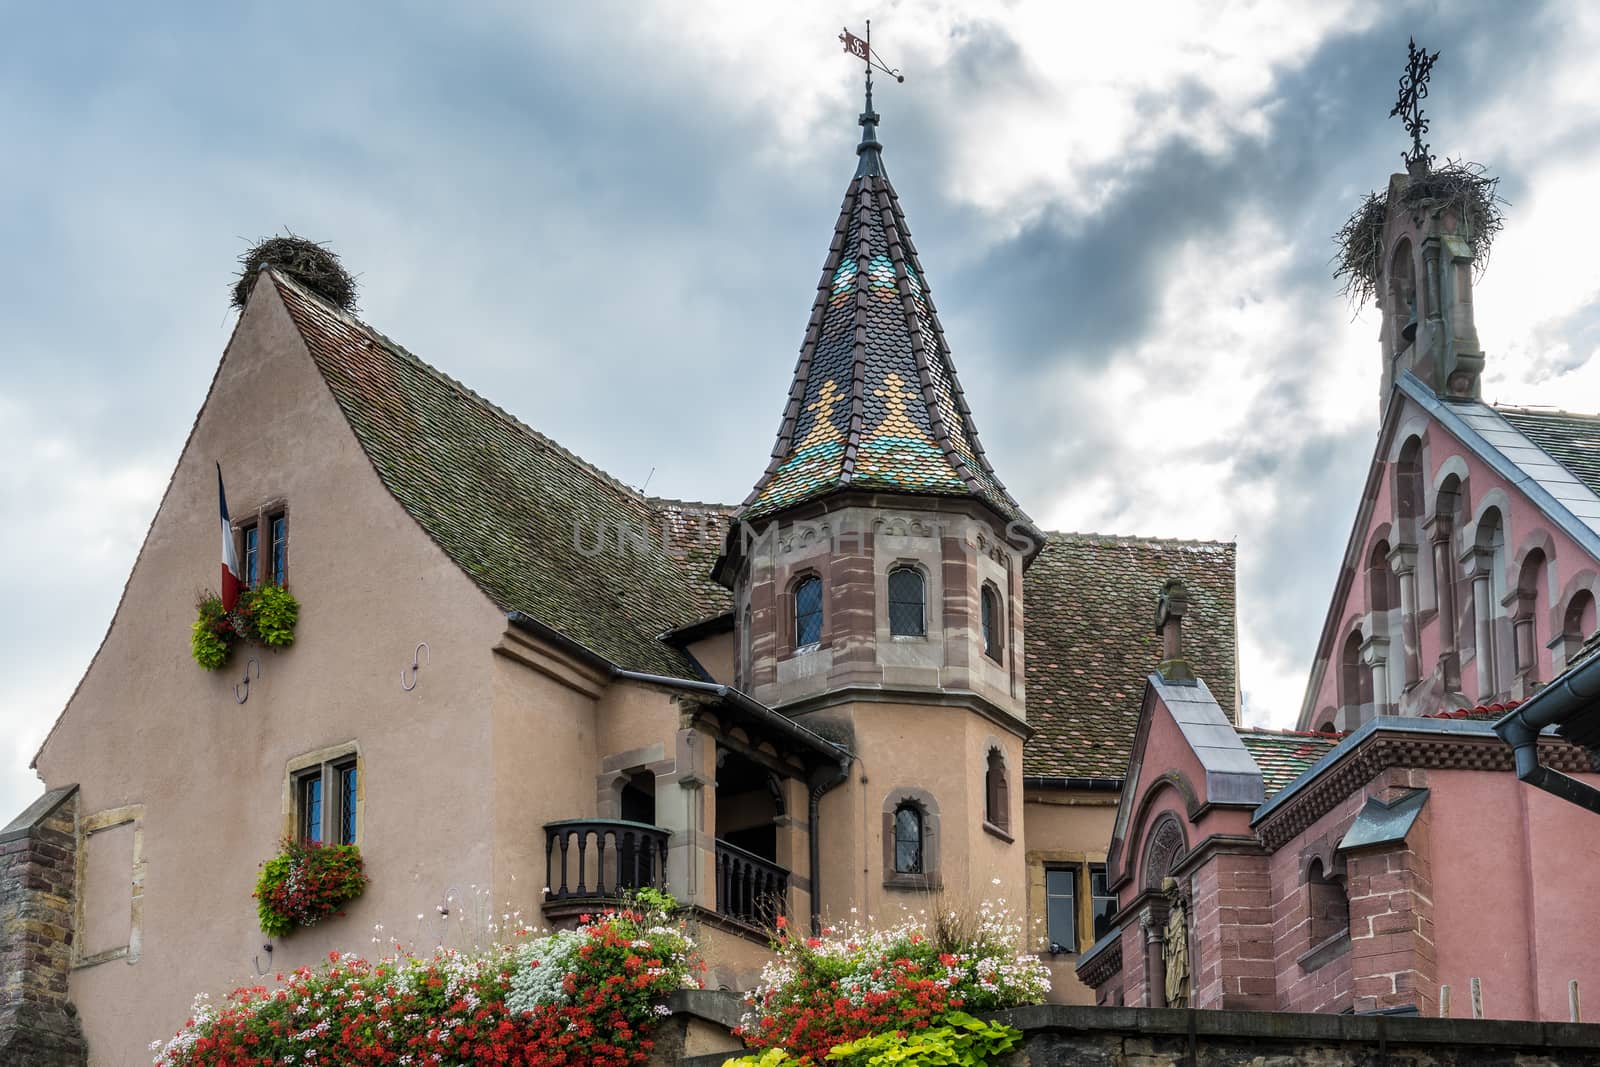 Chateau in Eguisheim in Haut-Rhin Alsace by phil_bird